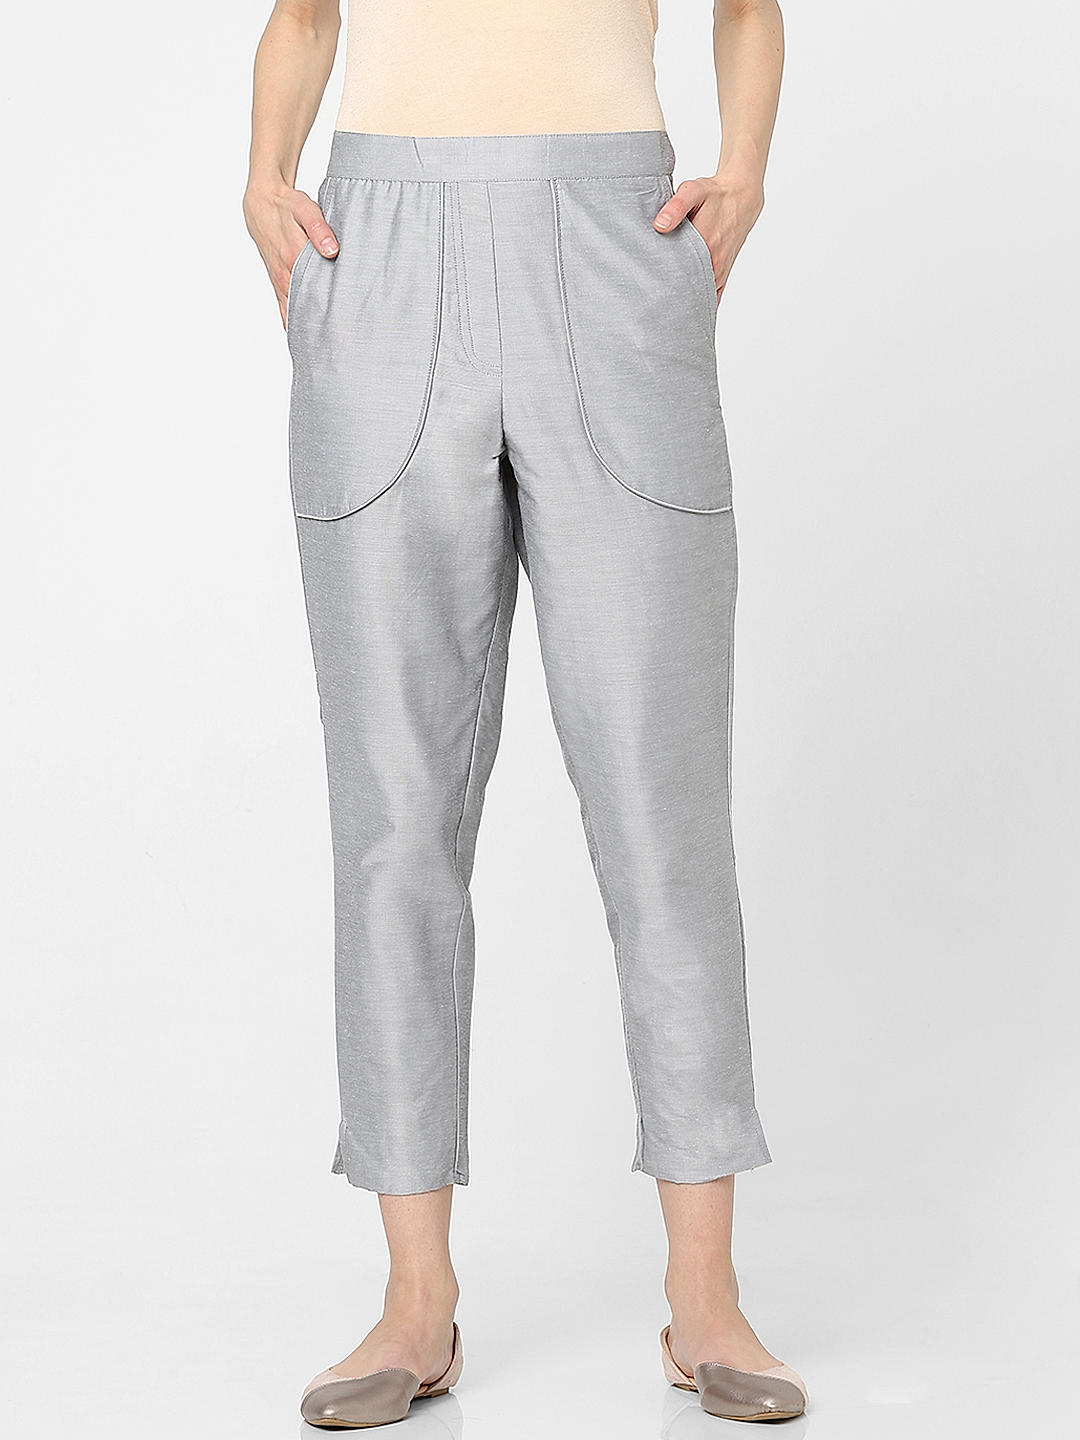 Grey pants female | Max Mara